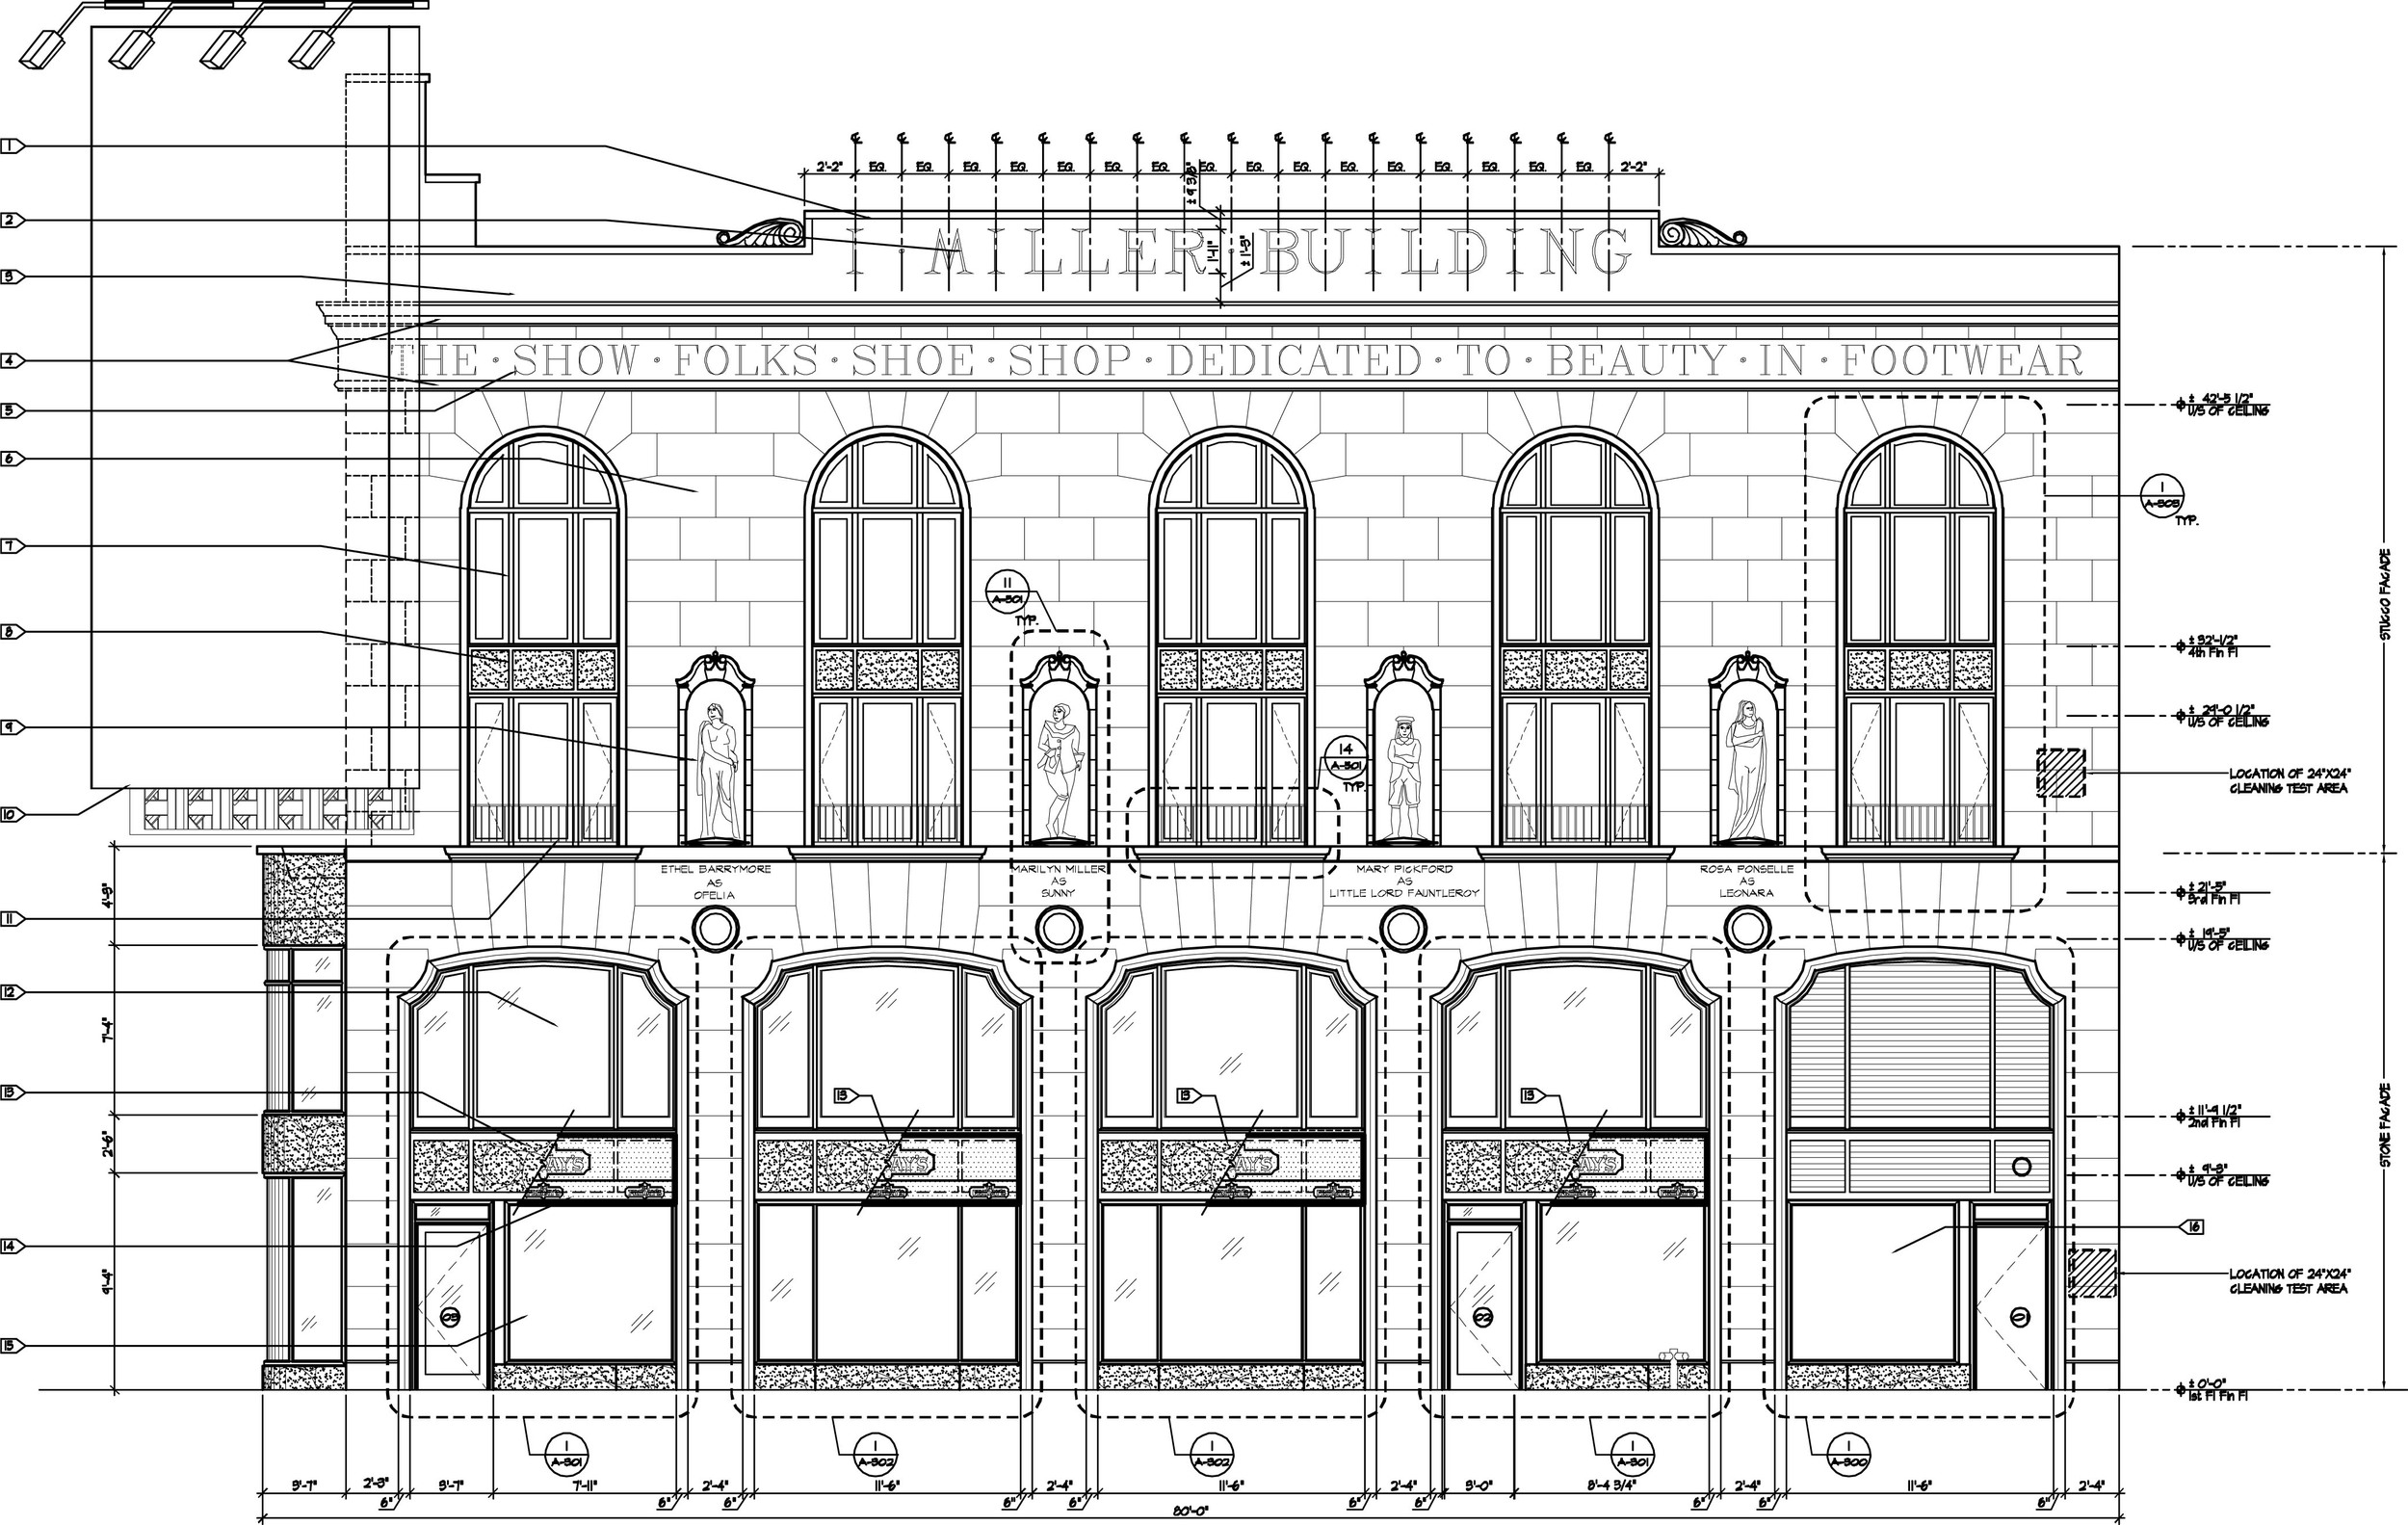 I. Miller Building Facade Restoration. Tobin Parnes Design. New York, NY. Historic Preservation. Building Elevation. Drawing.